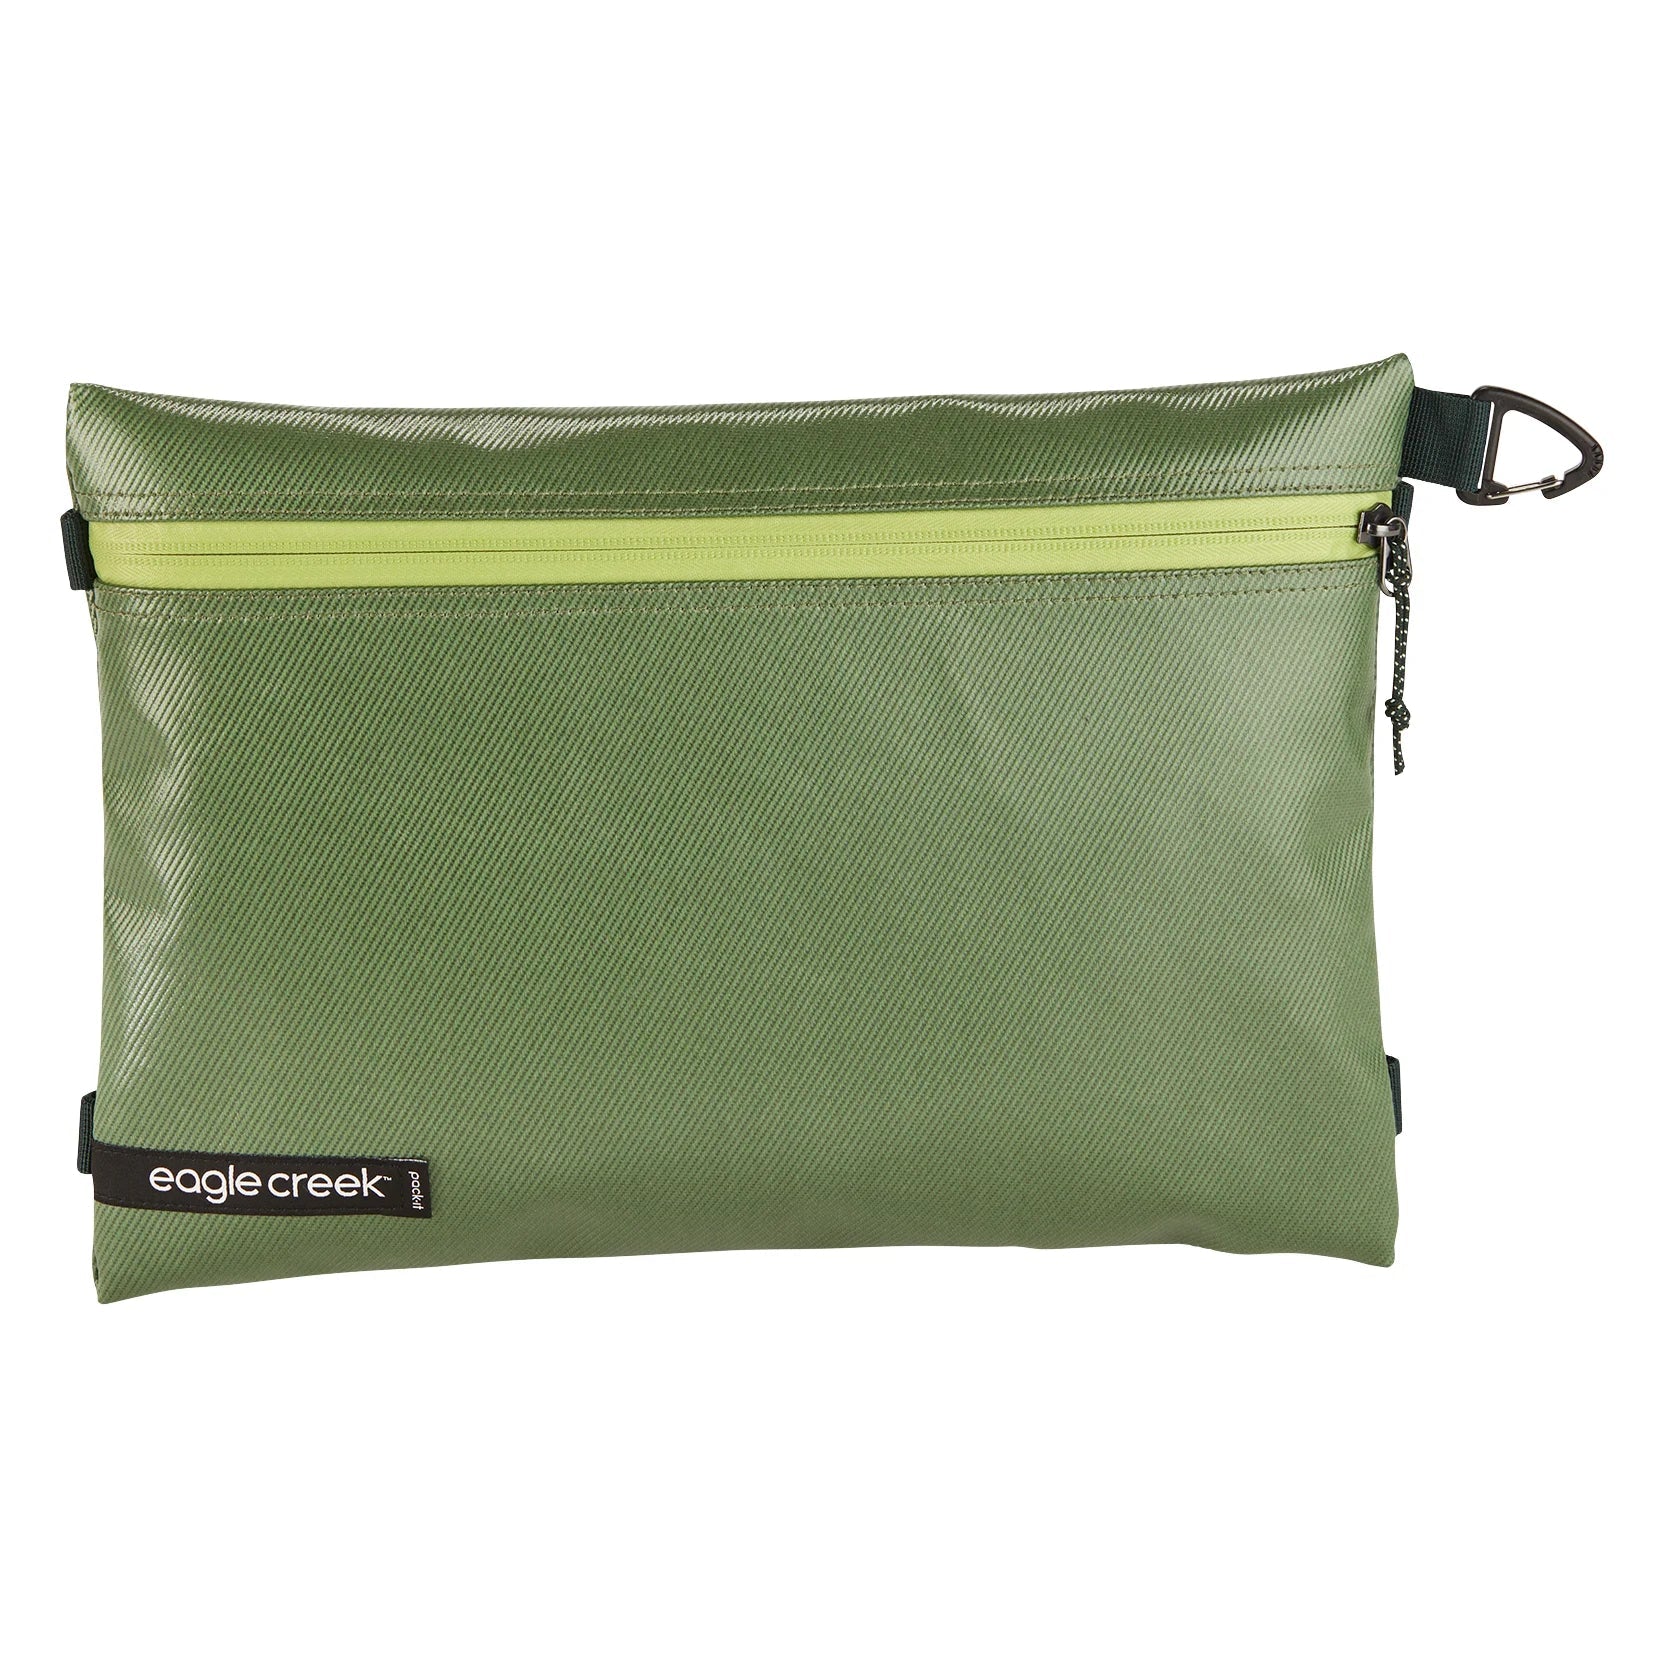 Eagle Creek Pack-It Gear Pouch M 36 cm - mossy green